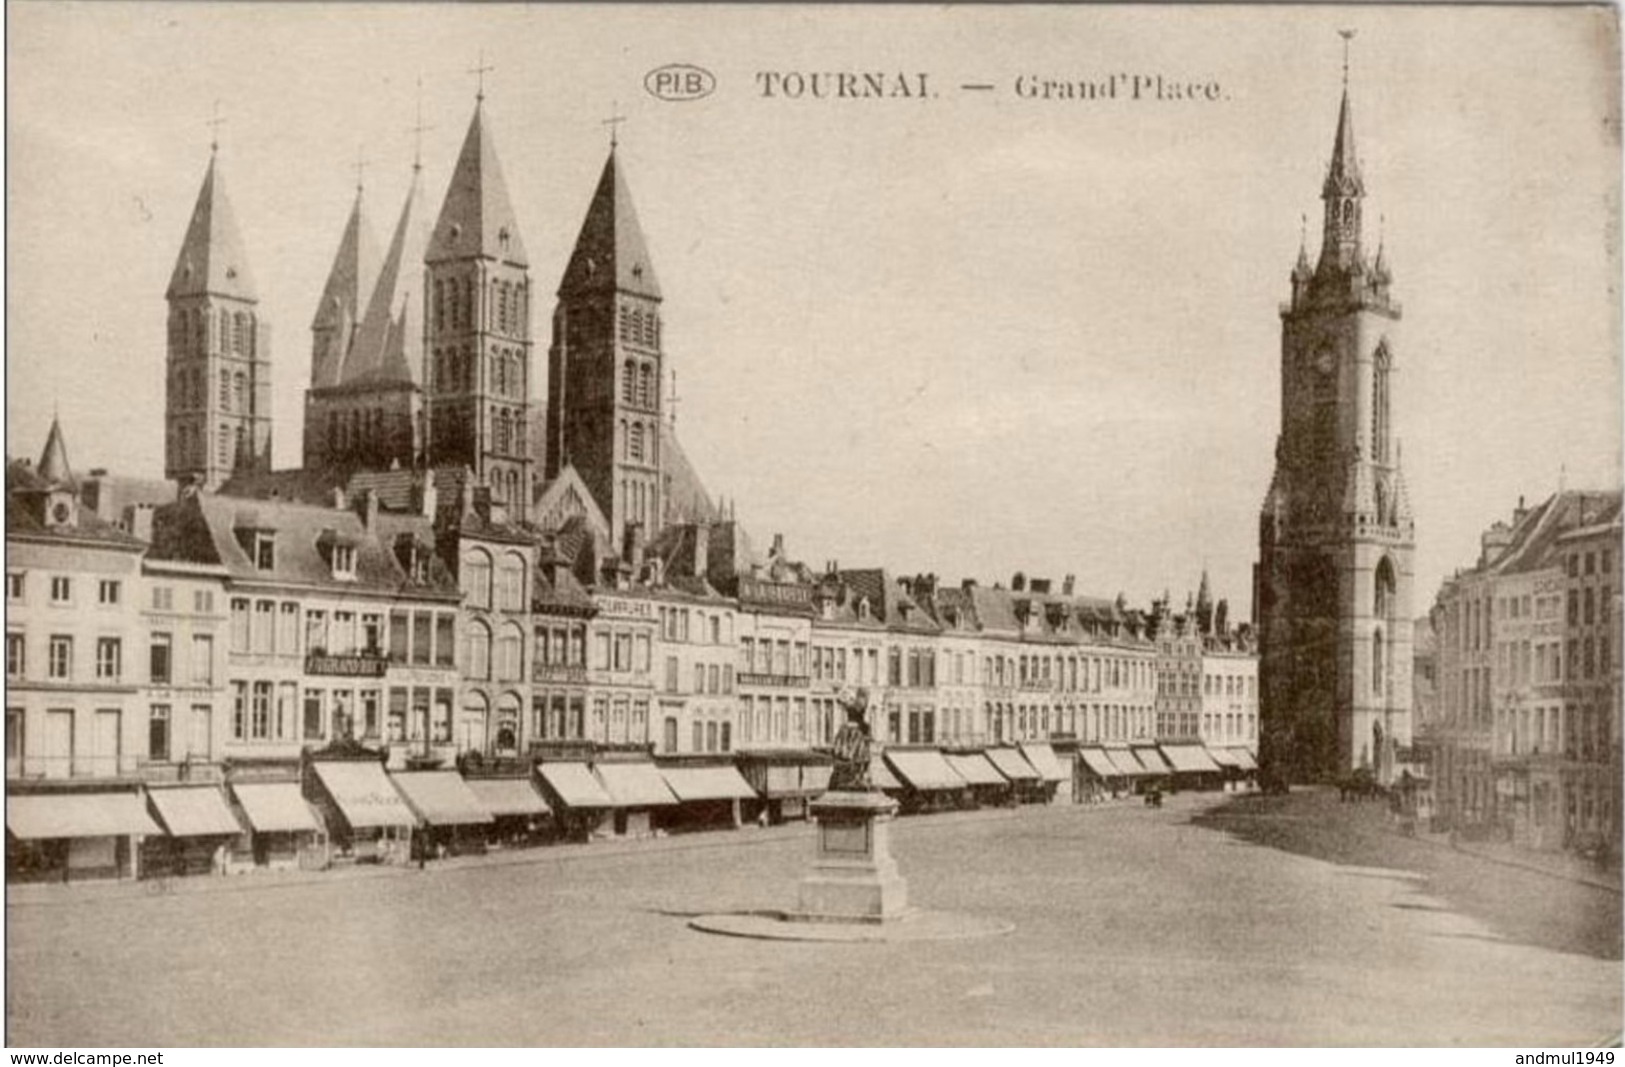 TOURNAI - Grand'Place - Edition Dochy-Huynen, Tournai - Doornik